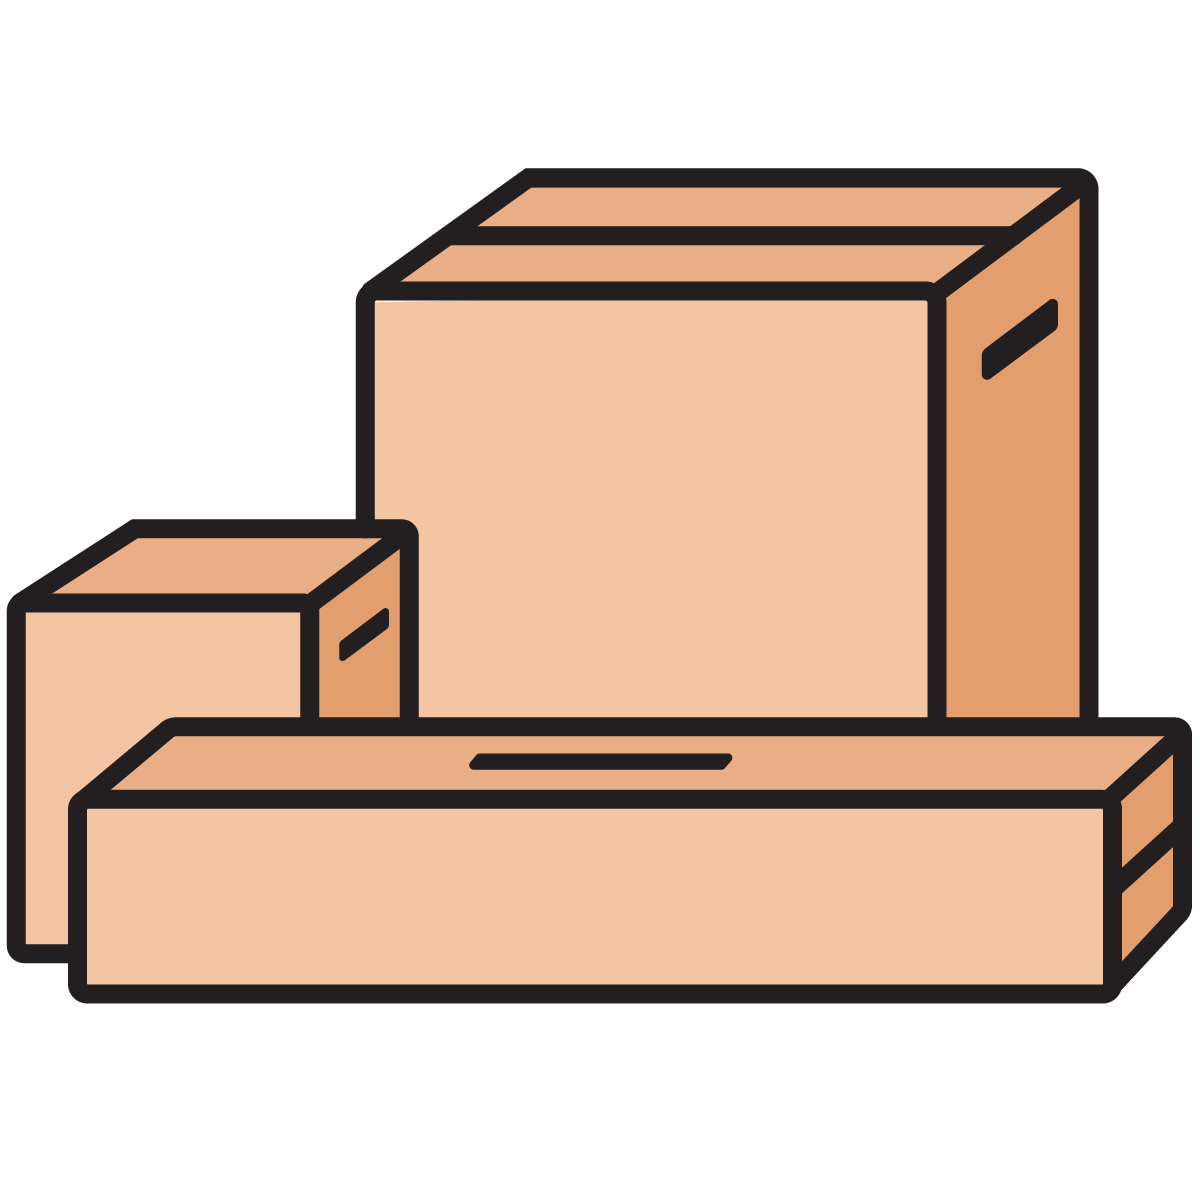 Cardboard Box PNG Image HD